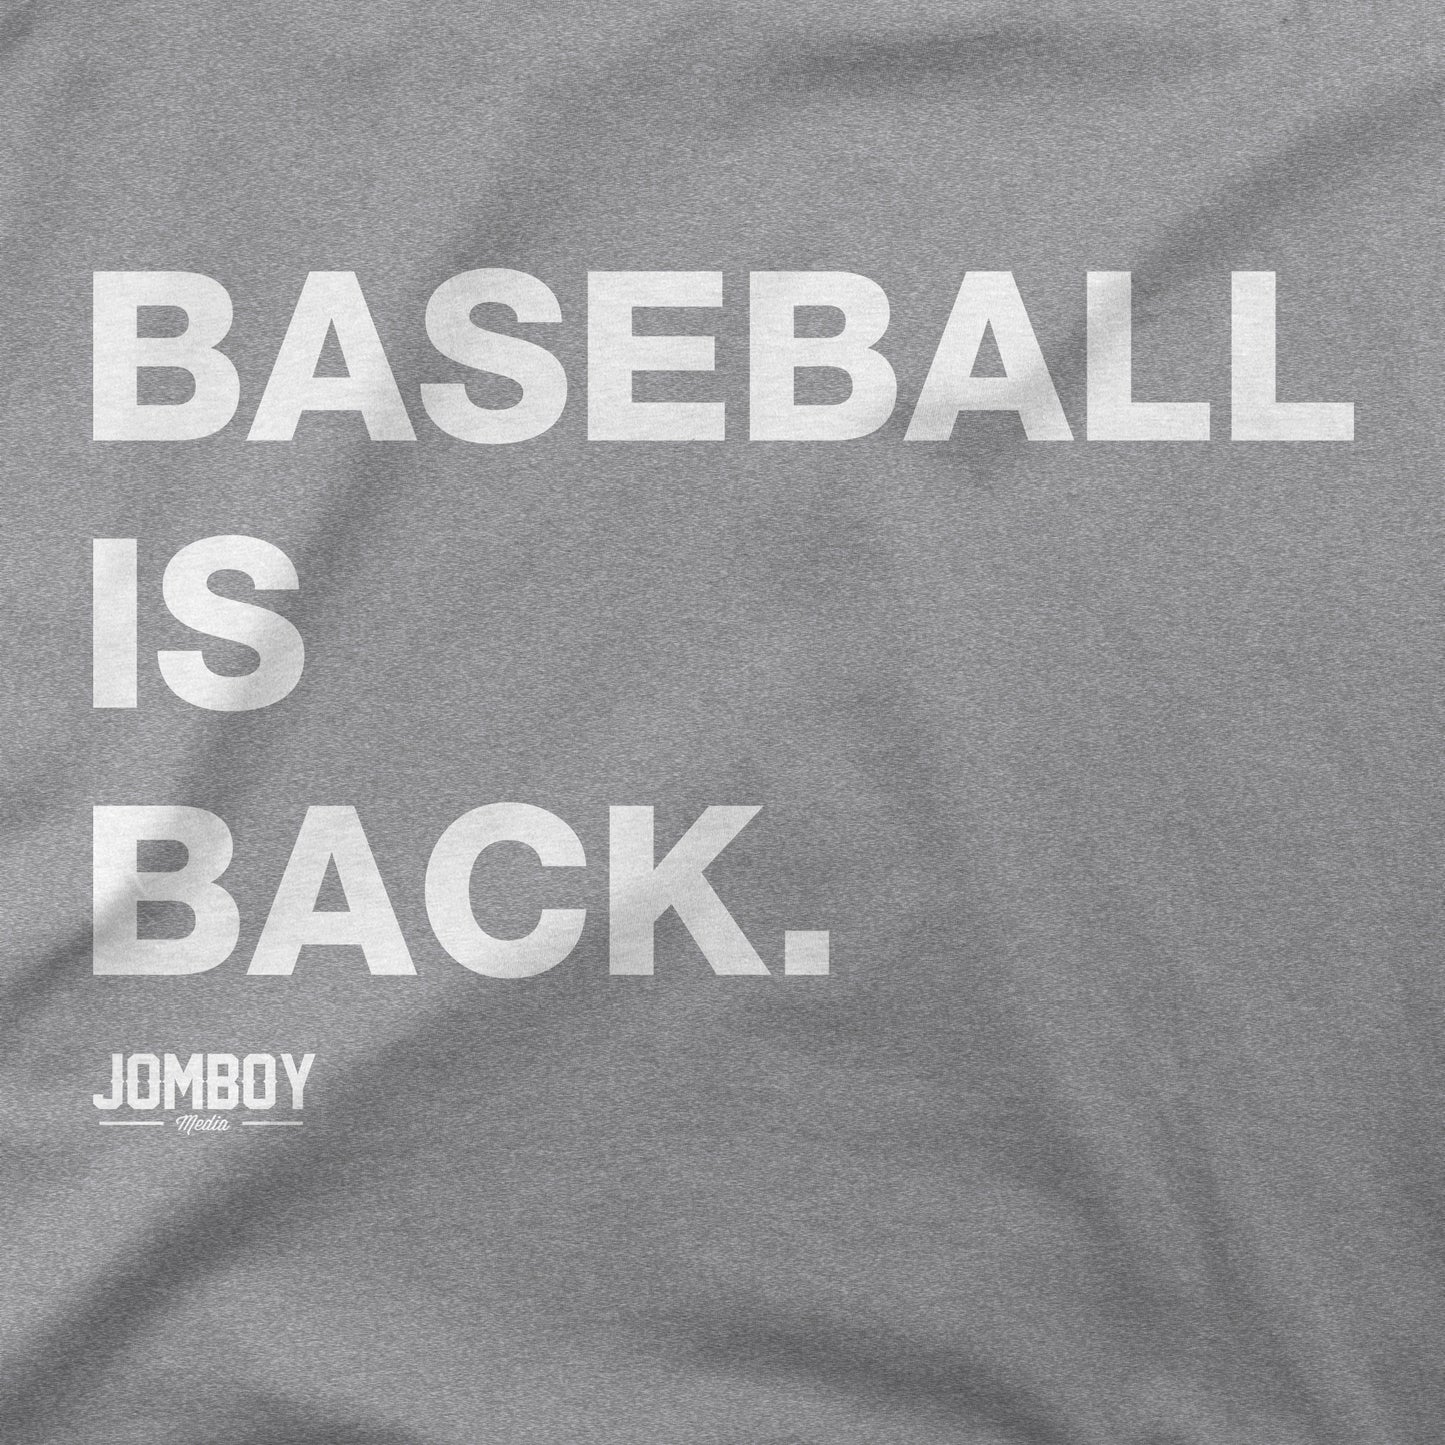 Baseball Is Back. | T-Shirt